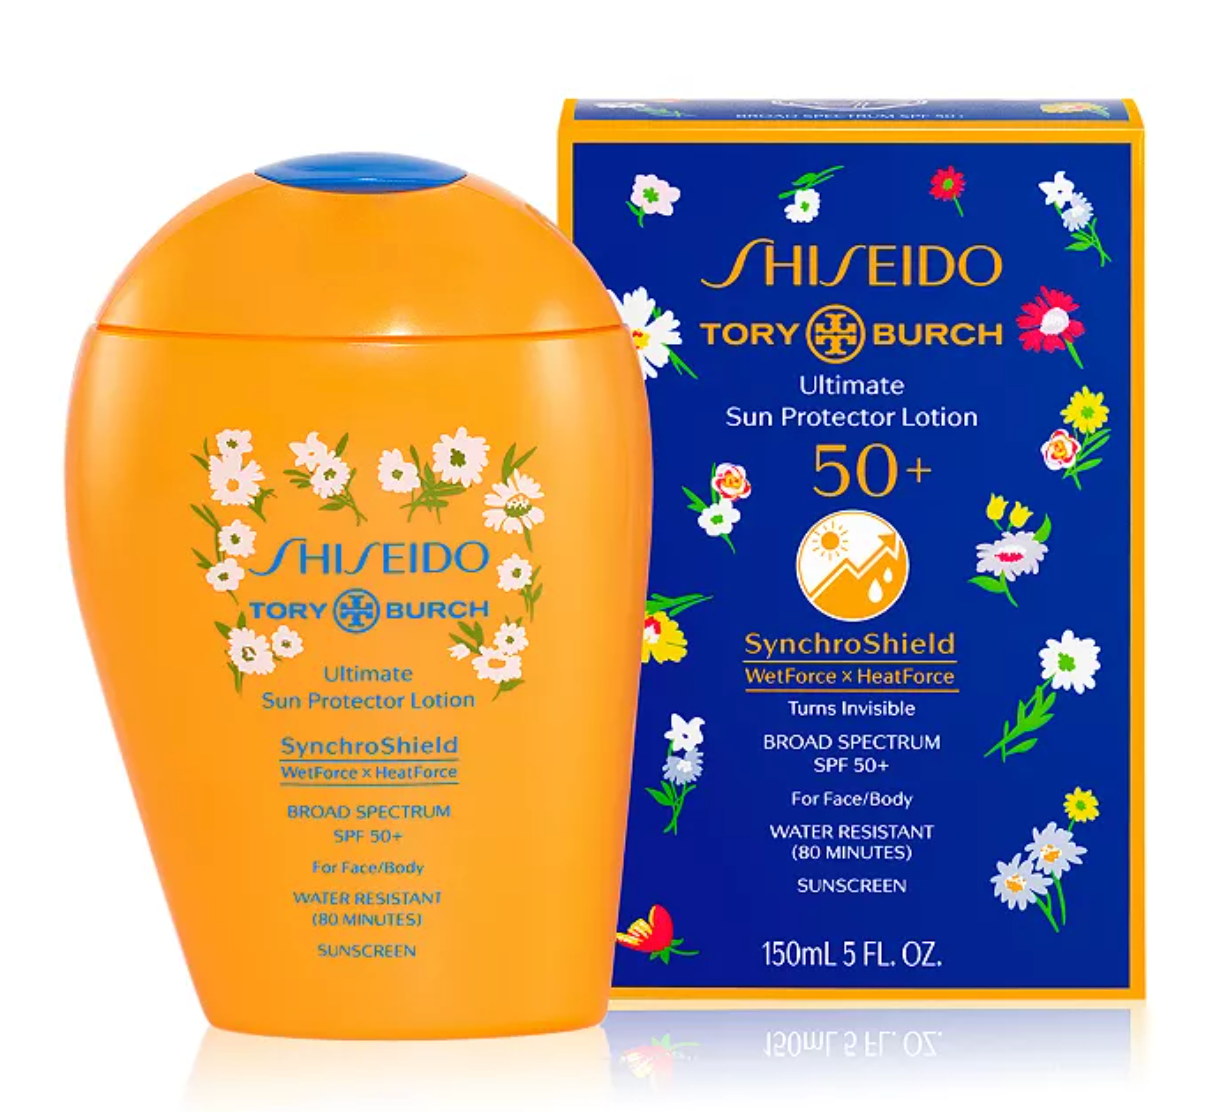 ''Shiseido Tory Burch Ultimate Sun Protector Lotion SPF 50+ SUNSCREEN, 150 ml''